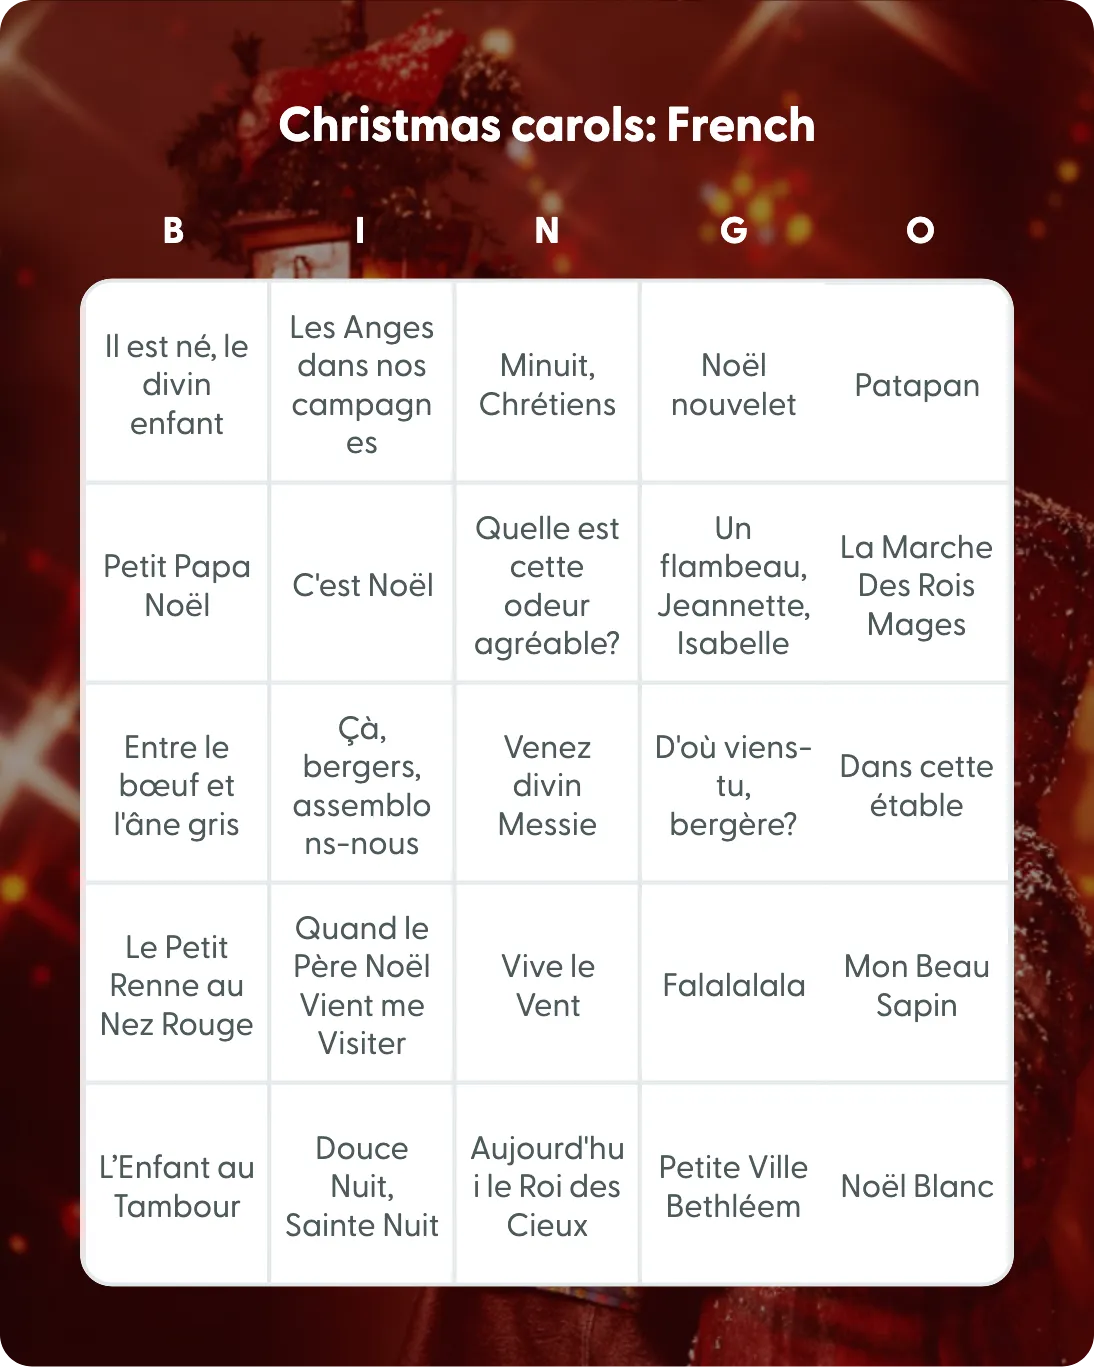 Christmas carols: French bingo card